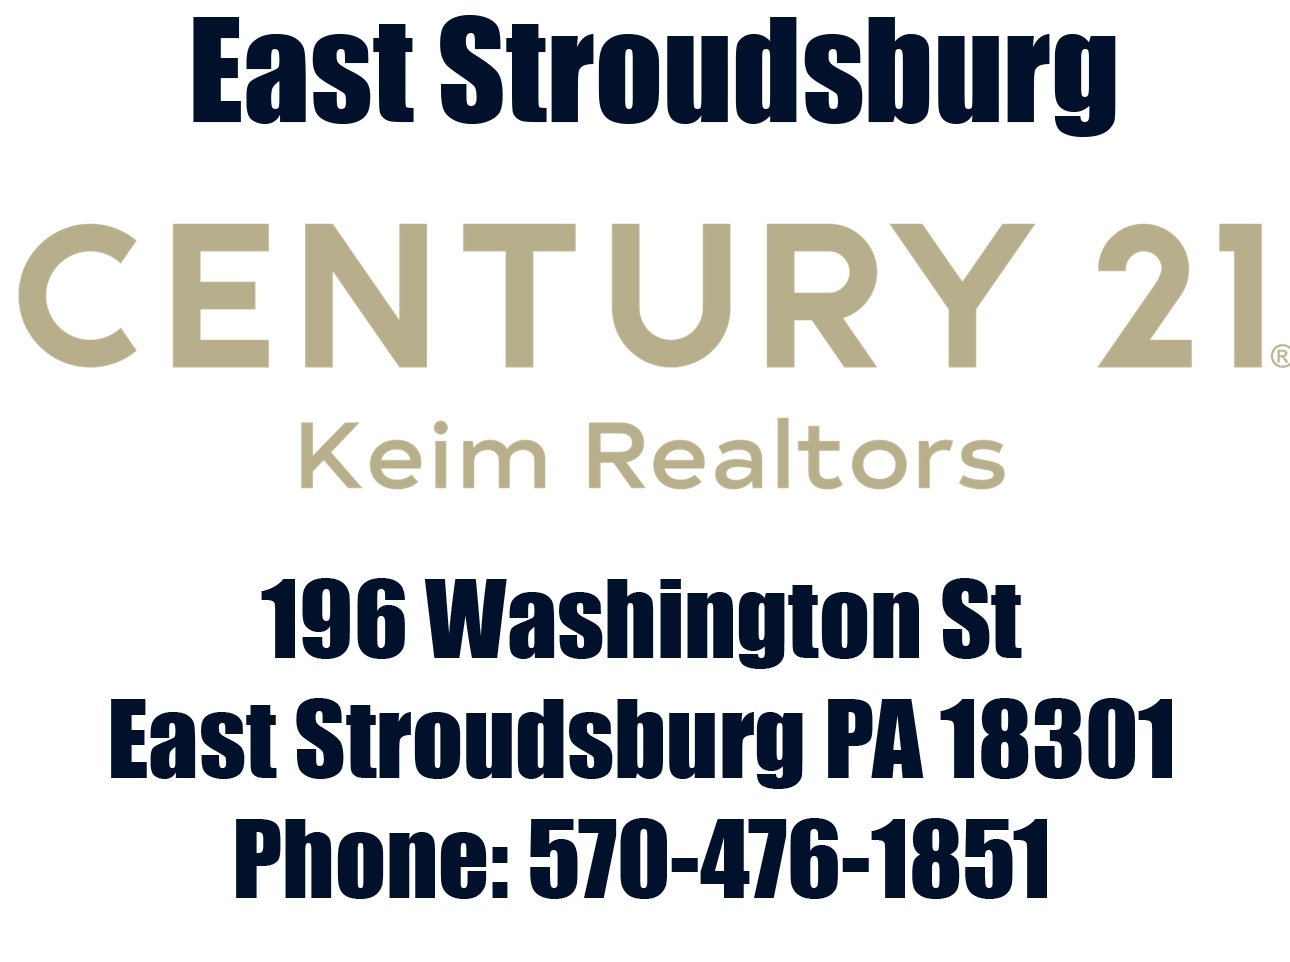 Century 21 Keim located in East Stroudsburg PA serving the Poconos